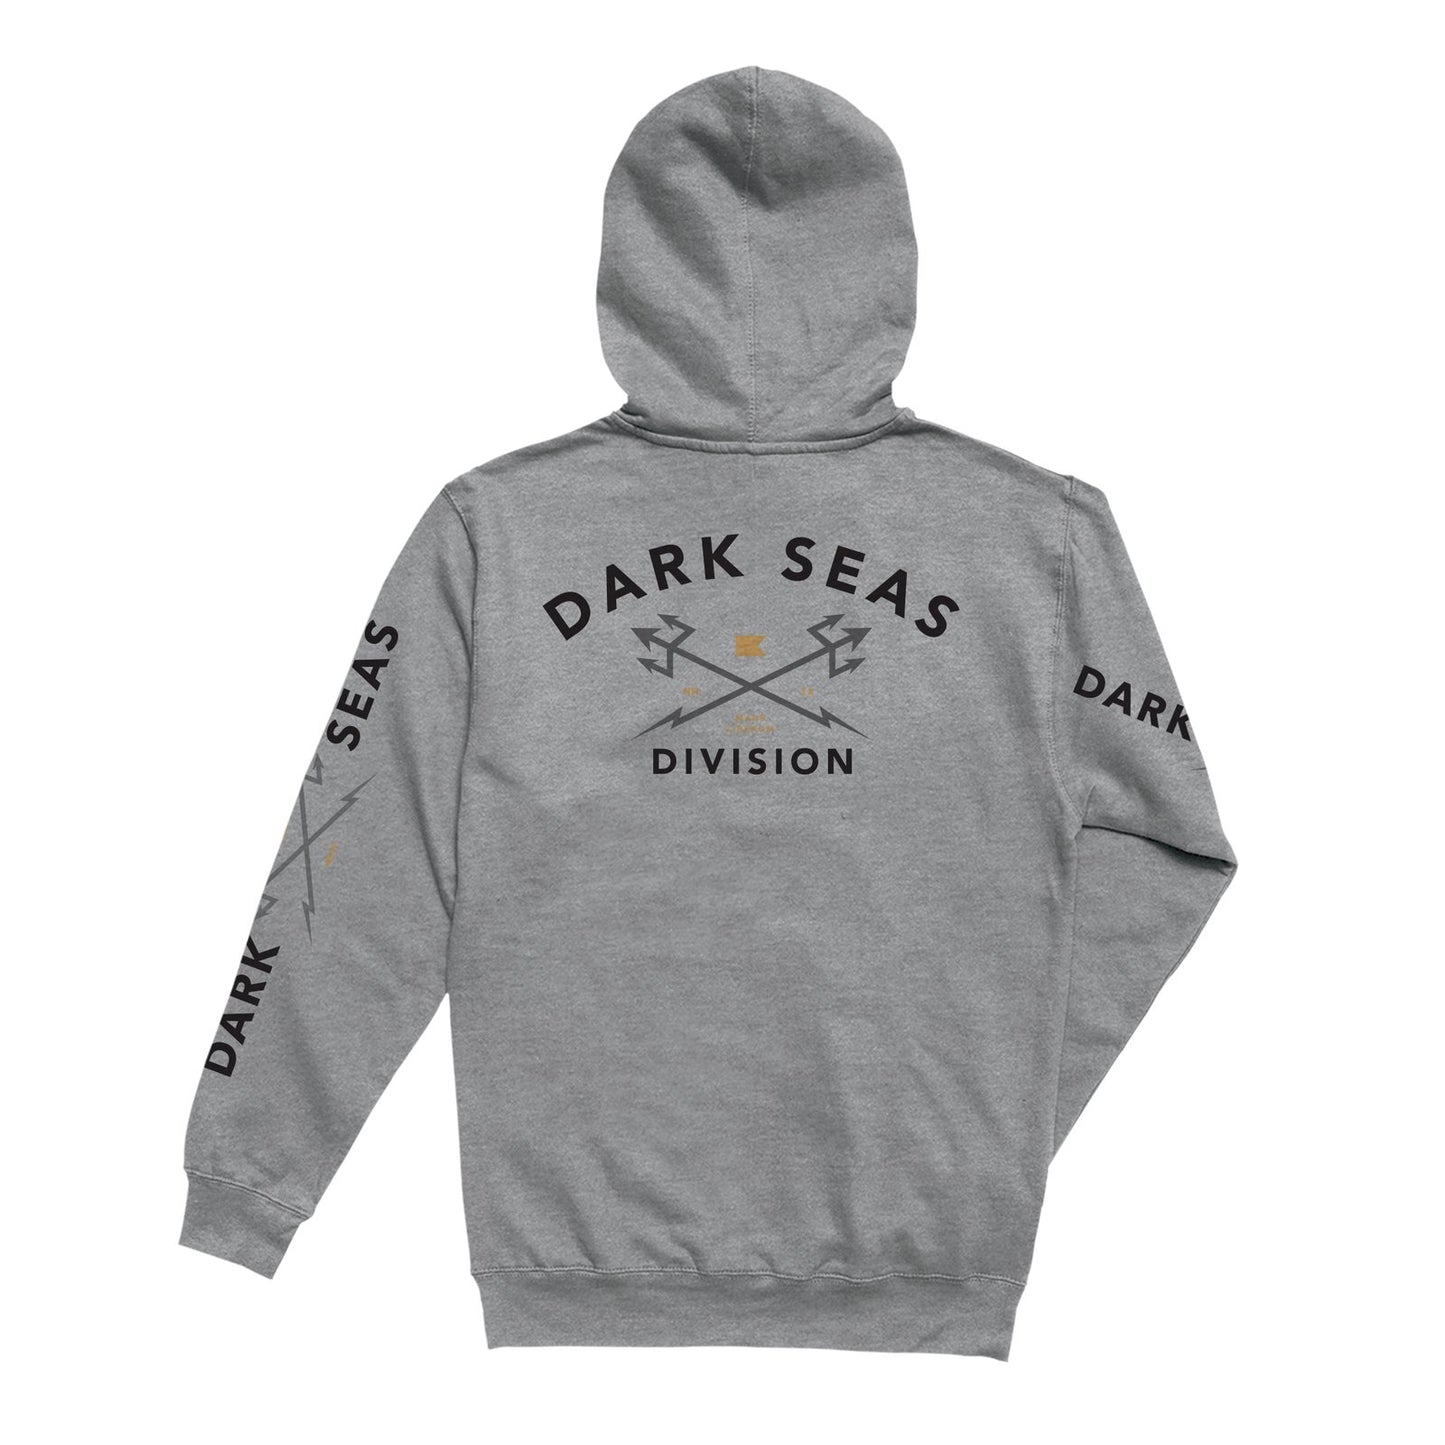 Dark Seas - Headmaster Premium Polar Fleece